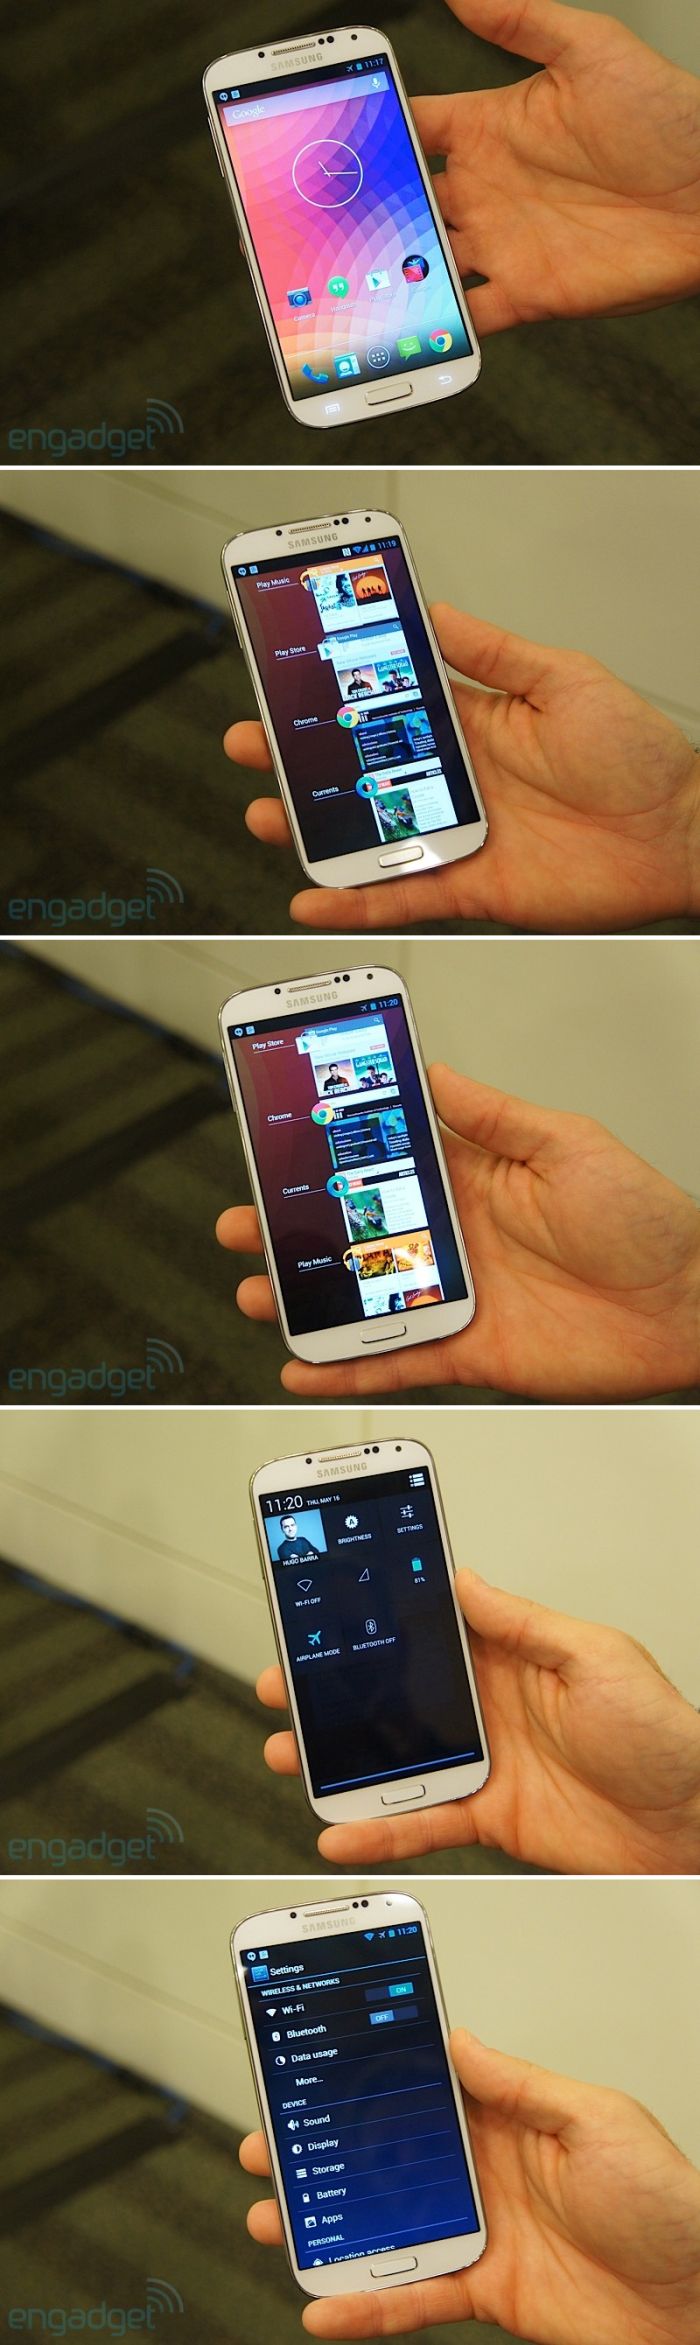 Fotókon a Google Nexus S4